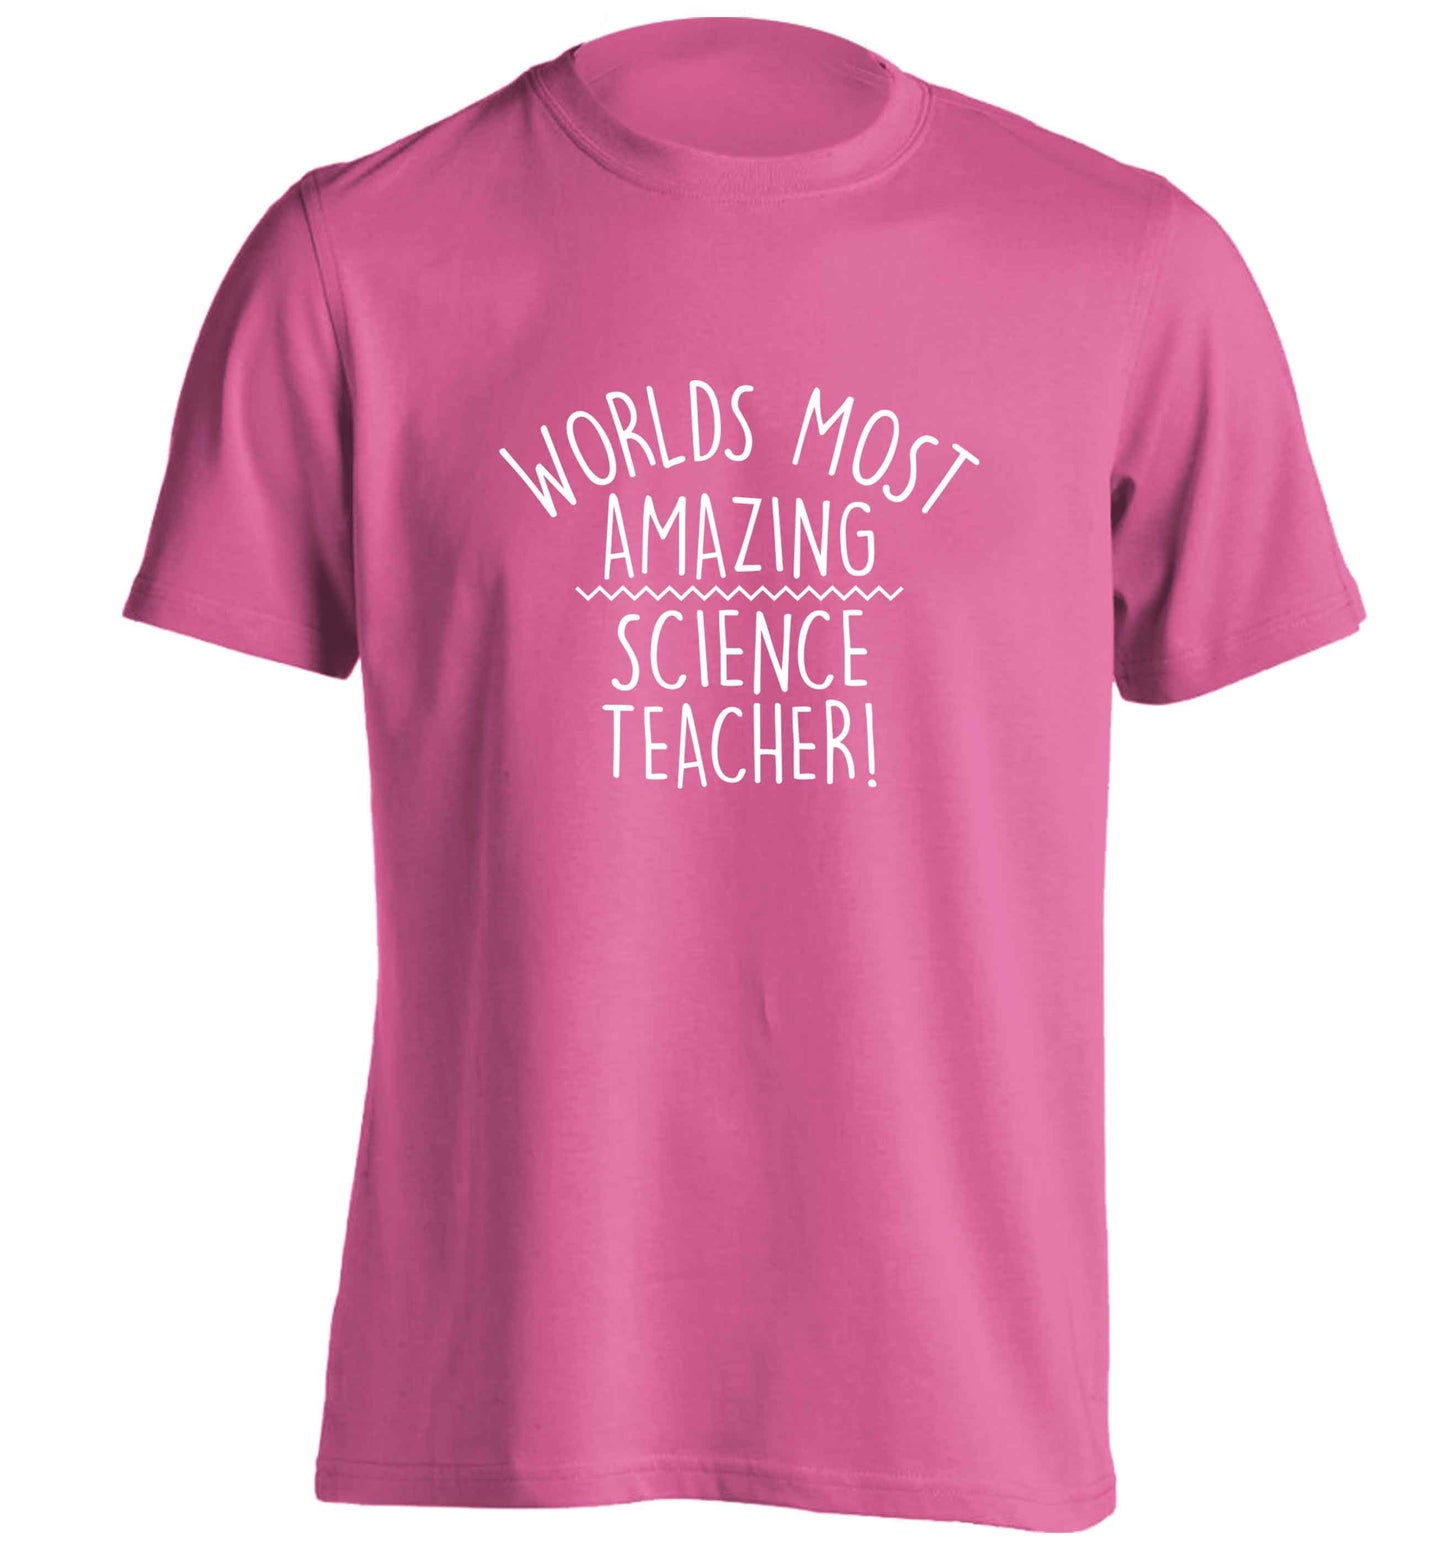 Worlds most amazing science teacher adults unisex pink Tshirt 2XL